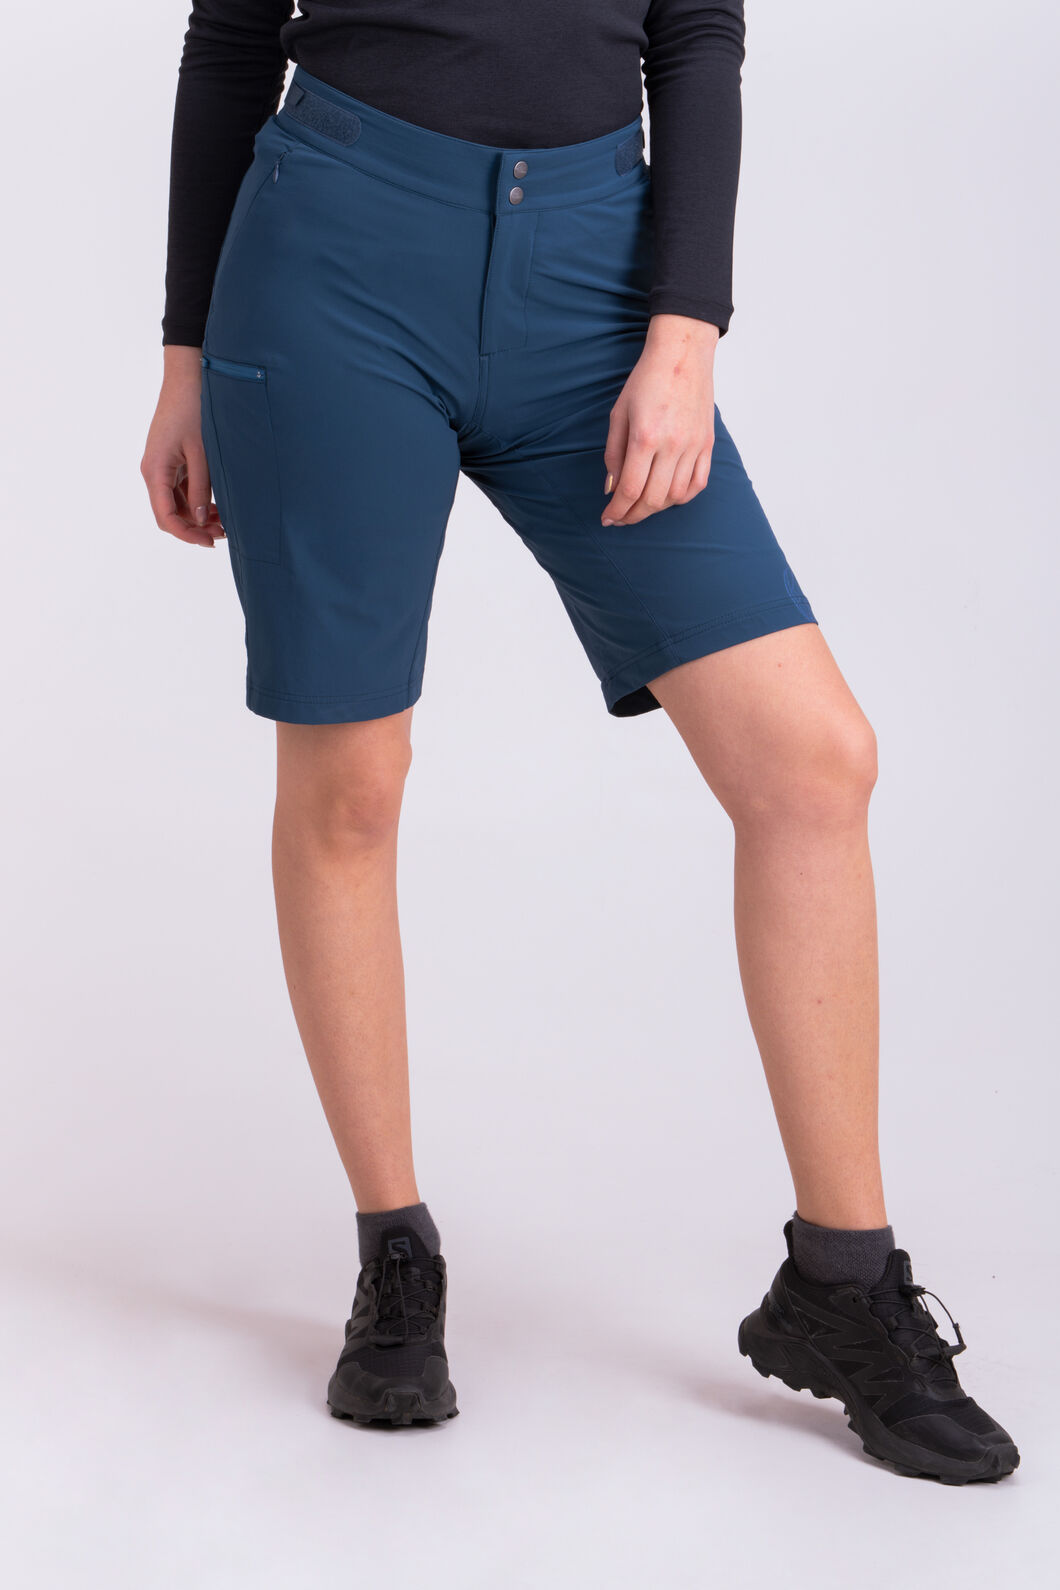 Mountain Bike Shorts, MTB Shorts Australia